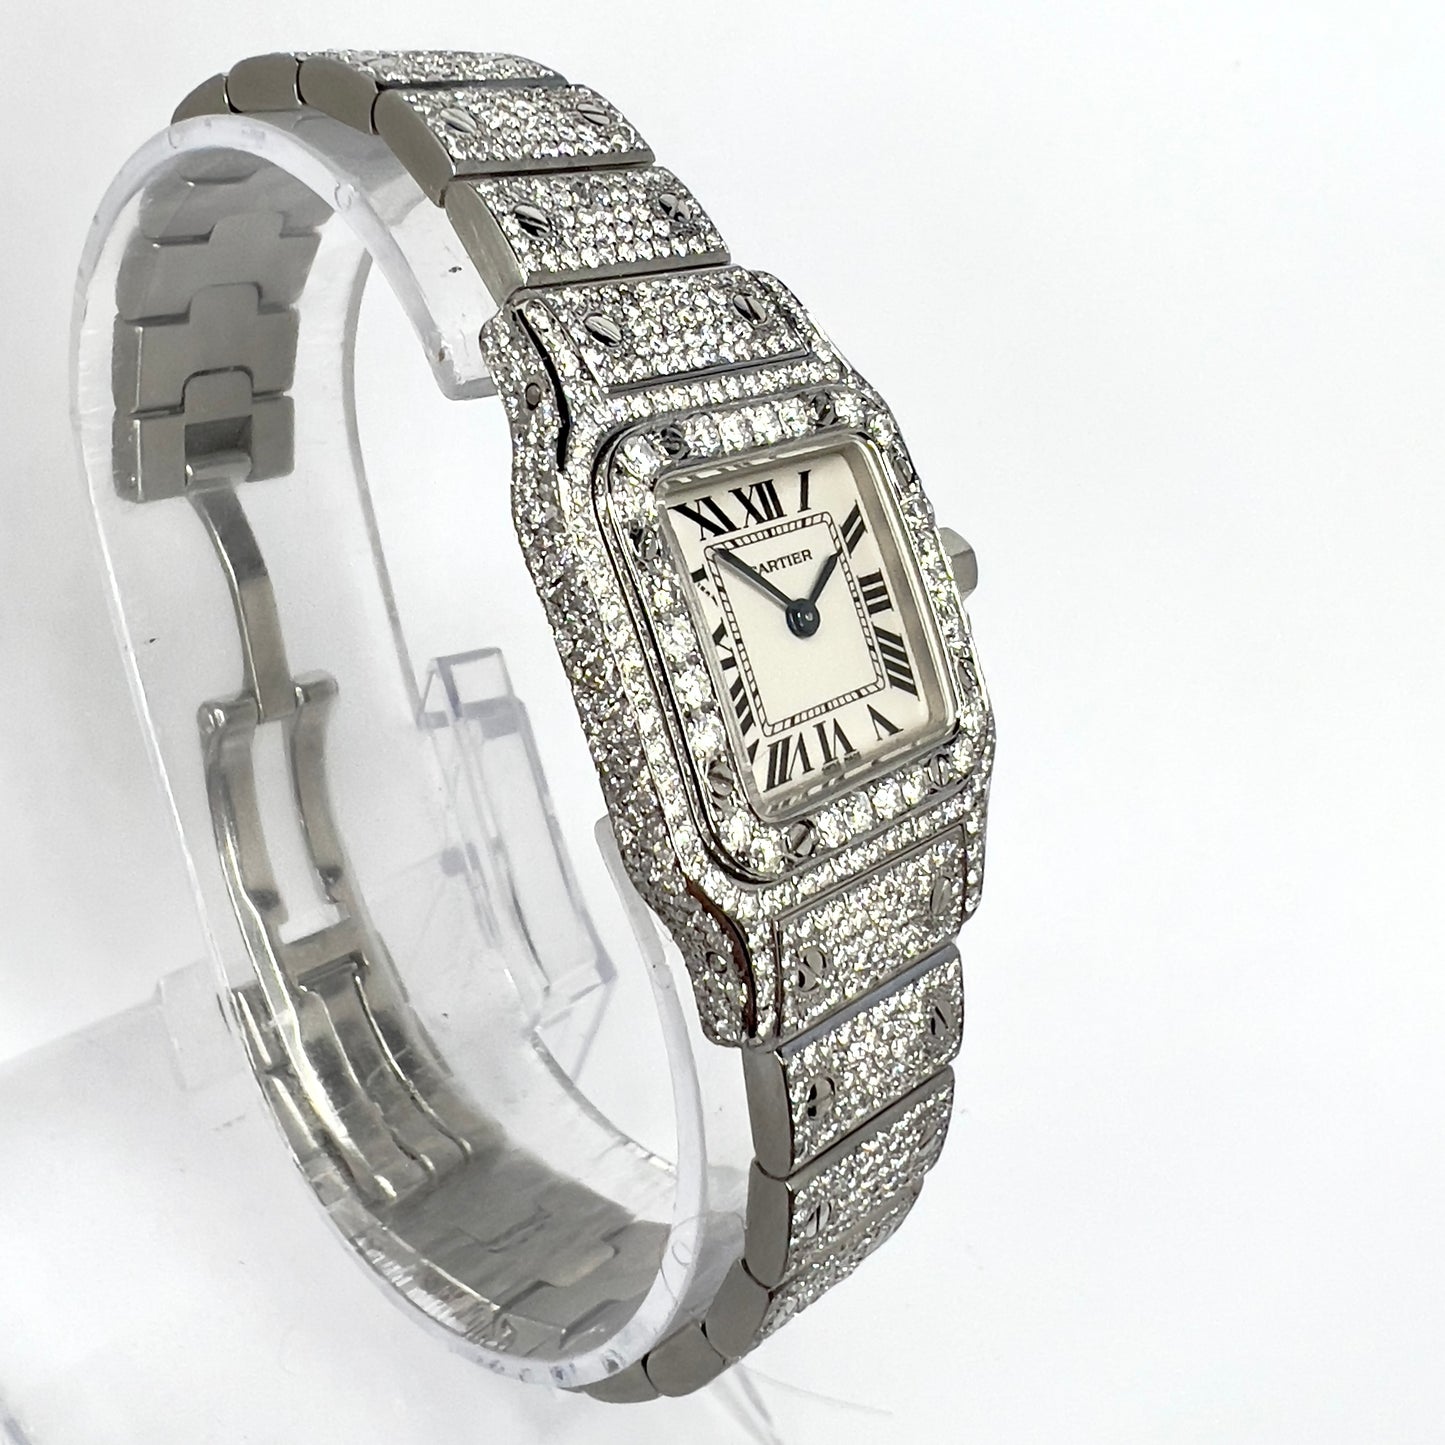 CARTIER SANTOS GALBEE 24mm Quartz Steel 6.36TCW Diamond Watch